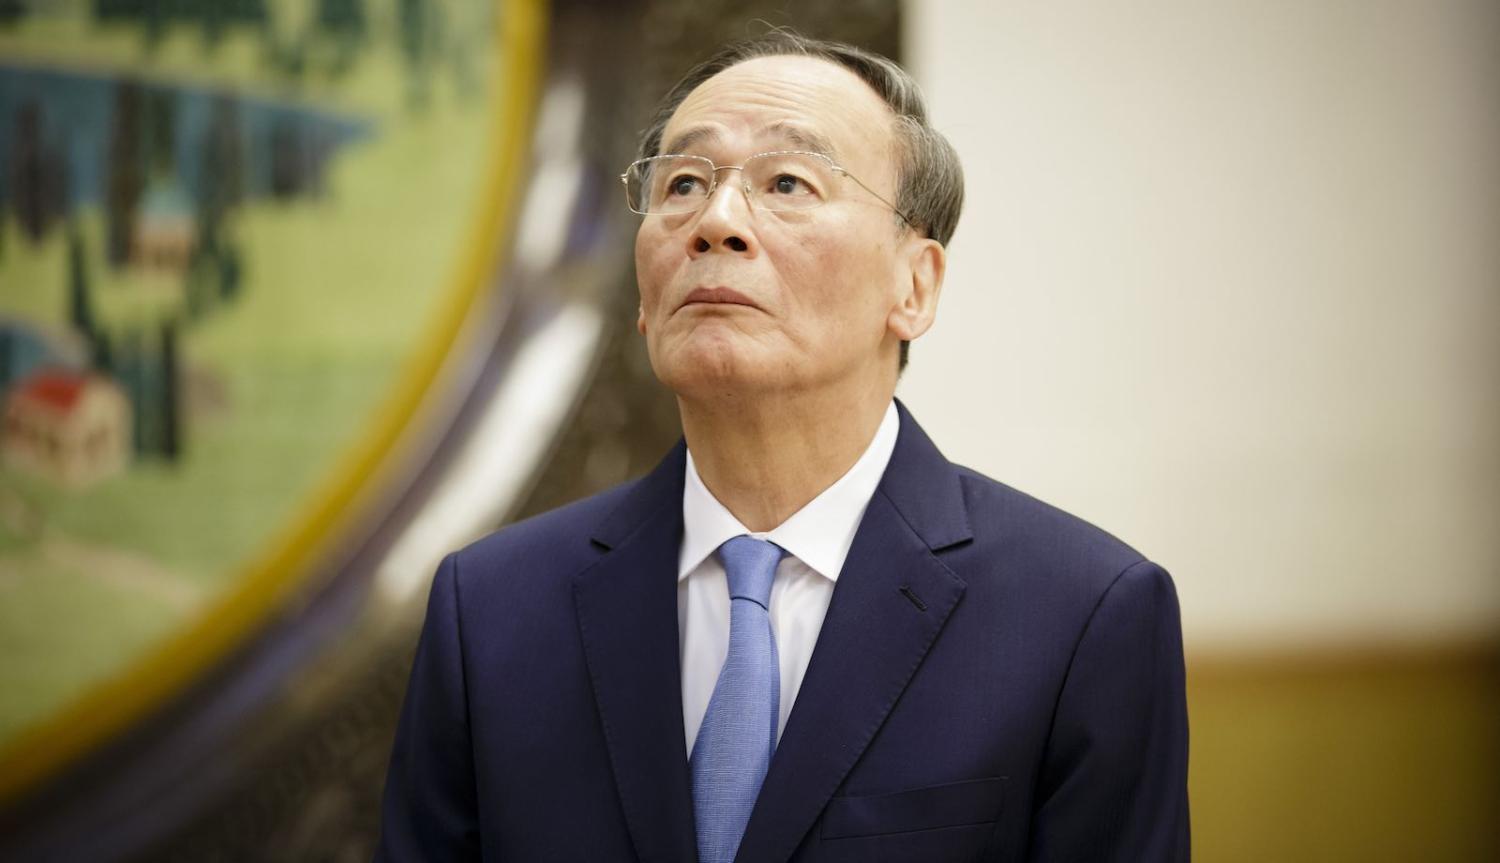 Wang Qishan, Vice President of the People's Republic of China (Photo: Inga Kjer via Getty)